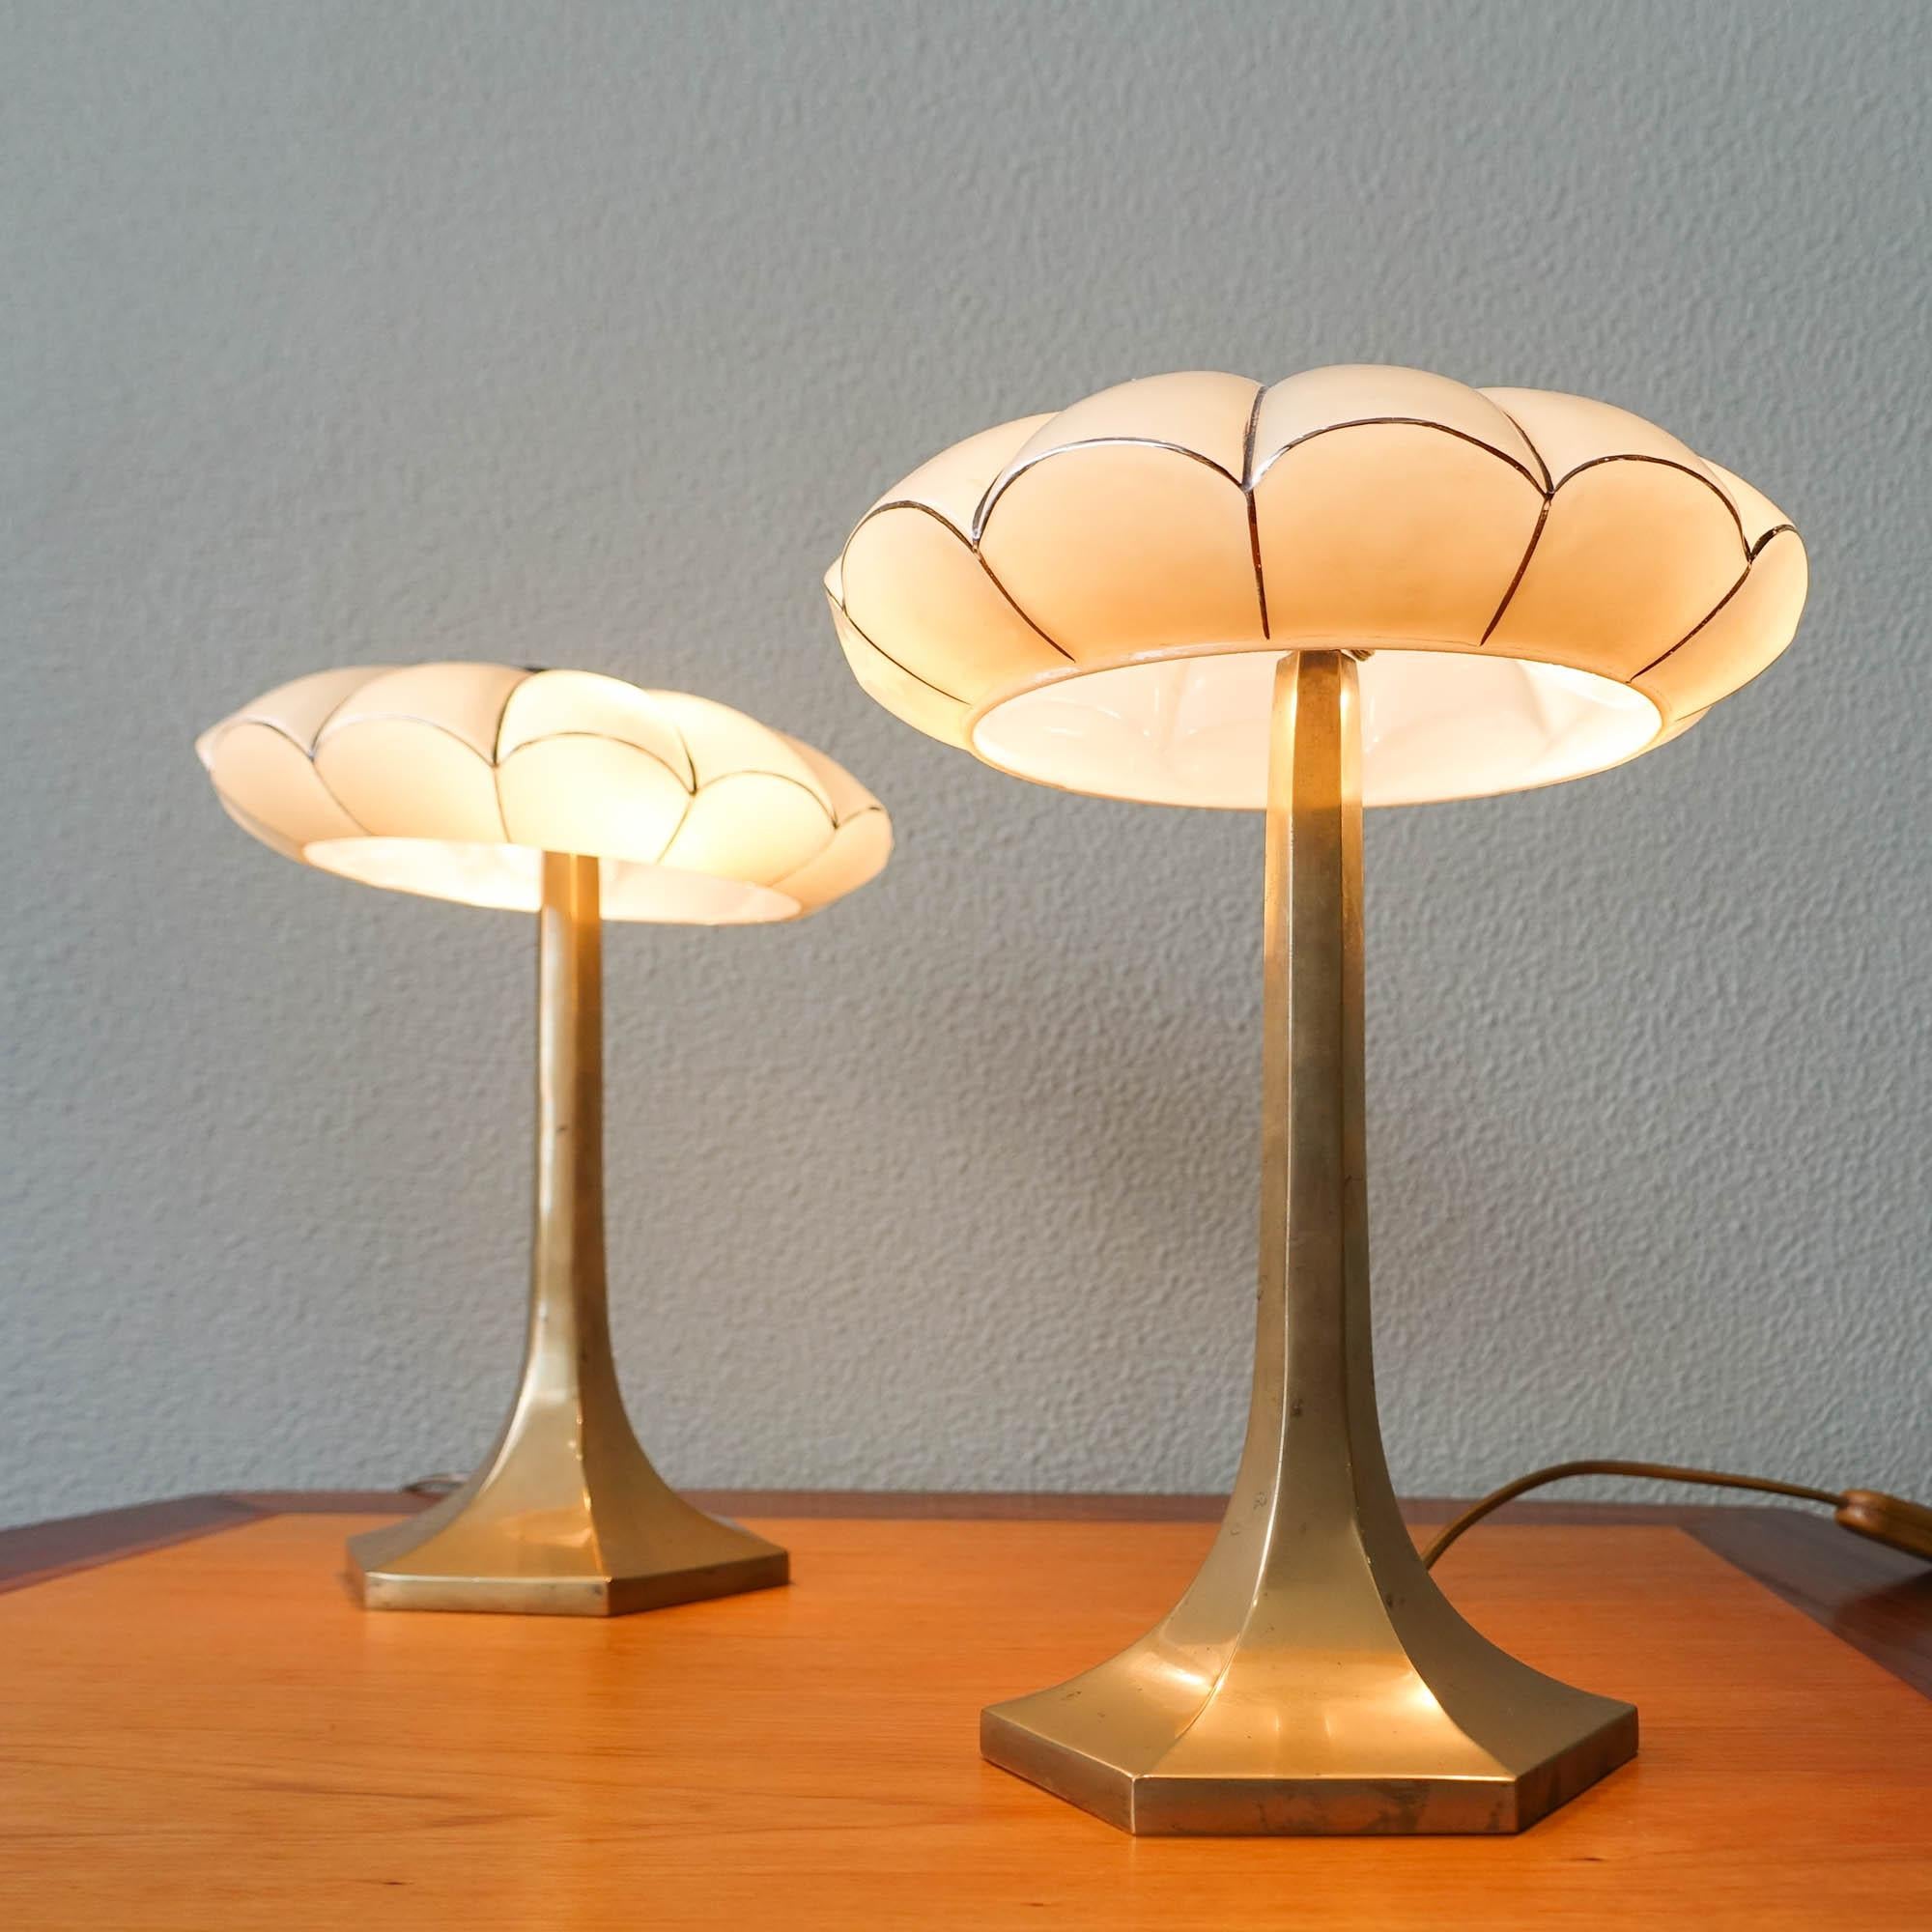 Pair of Art Deco Table Lamps from Josef Hoffman for Wiener Werkstatte, 1930's 6